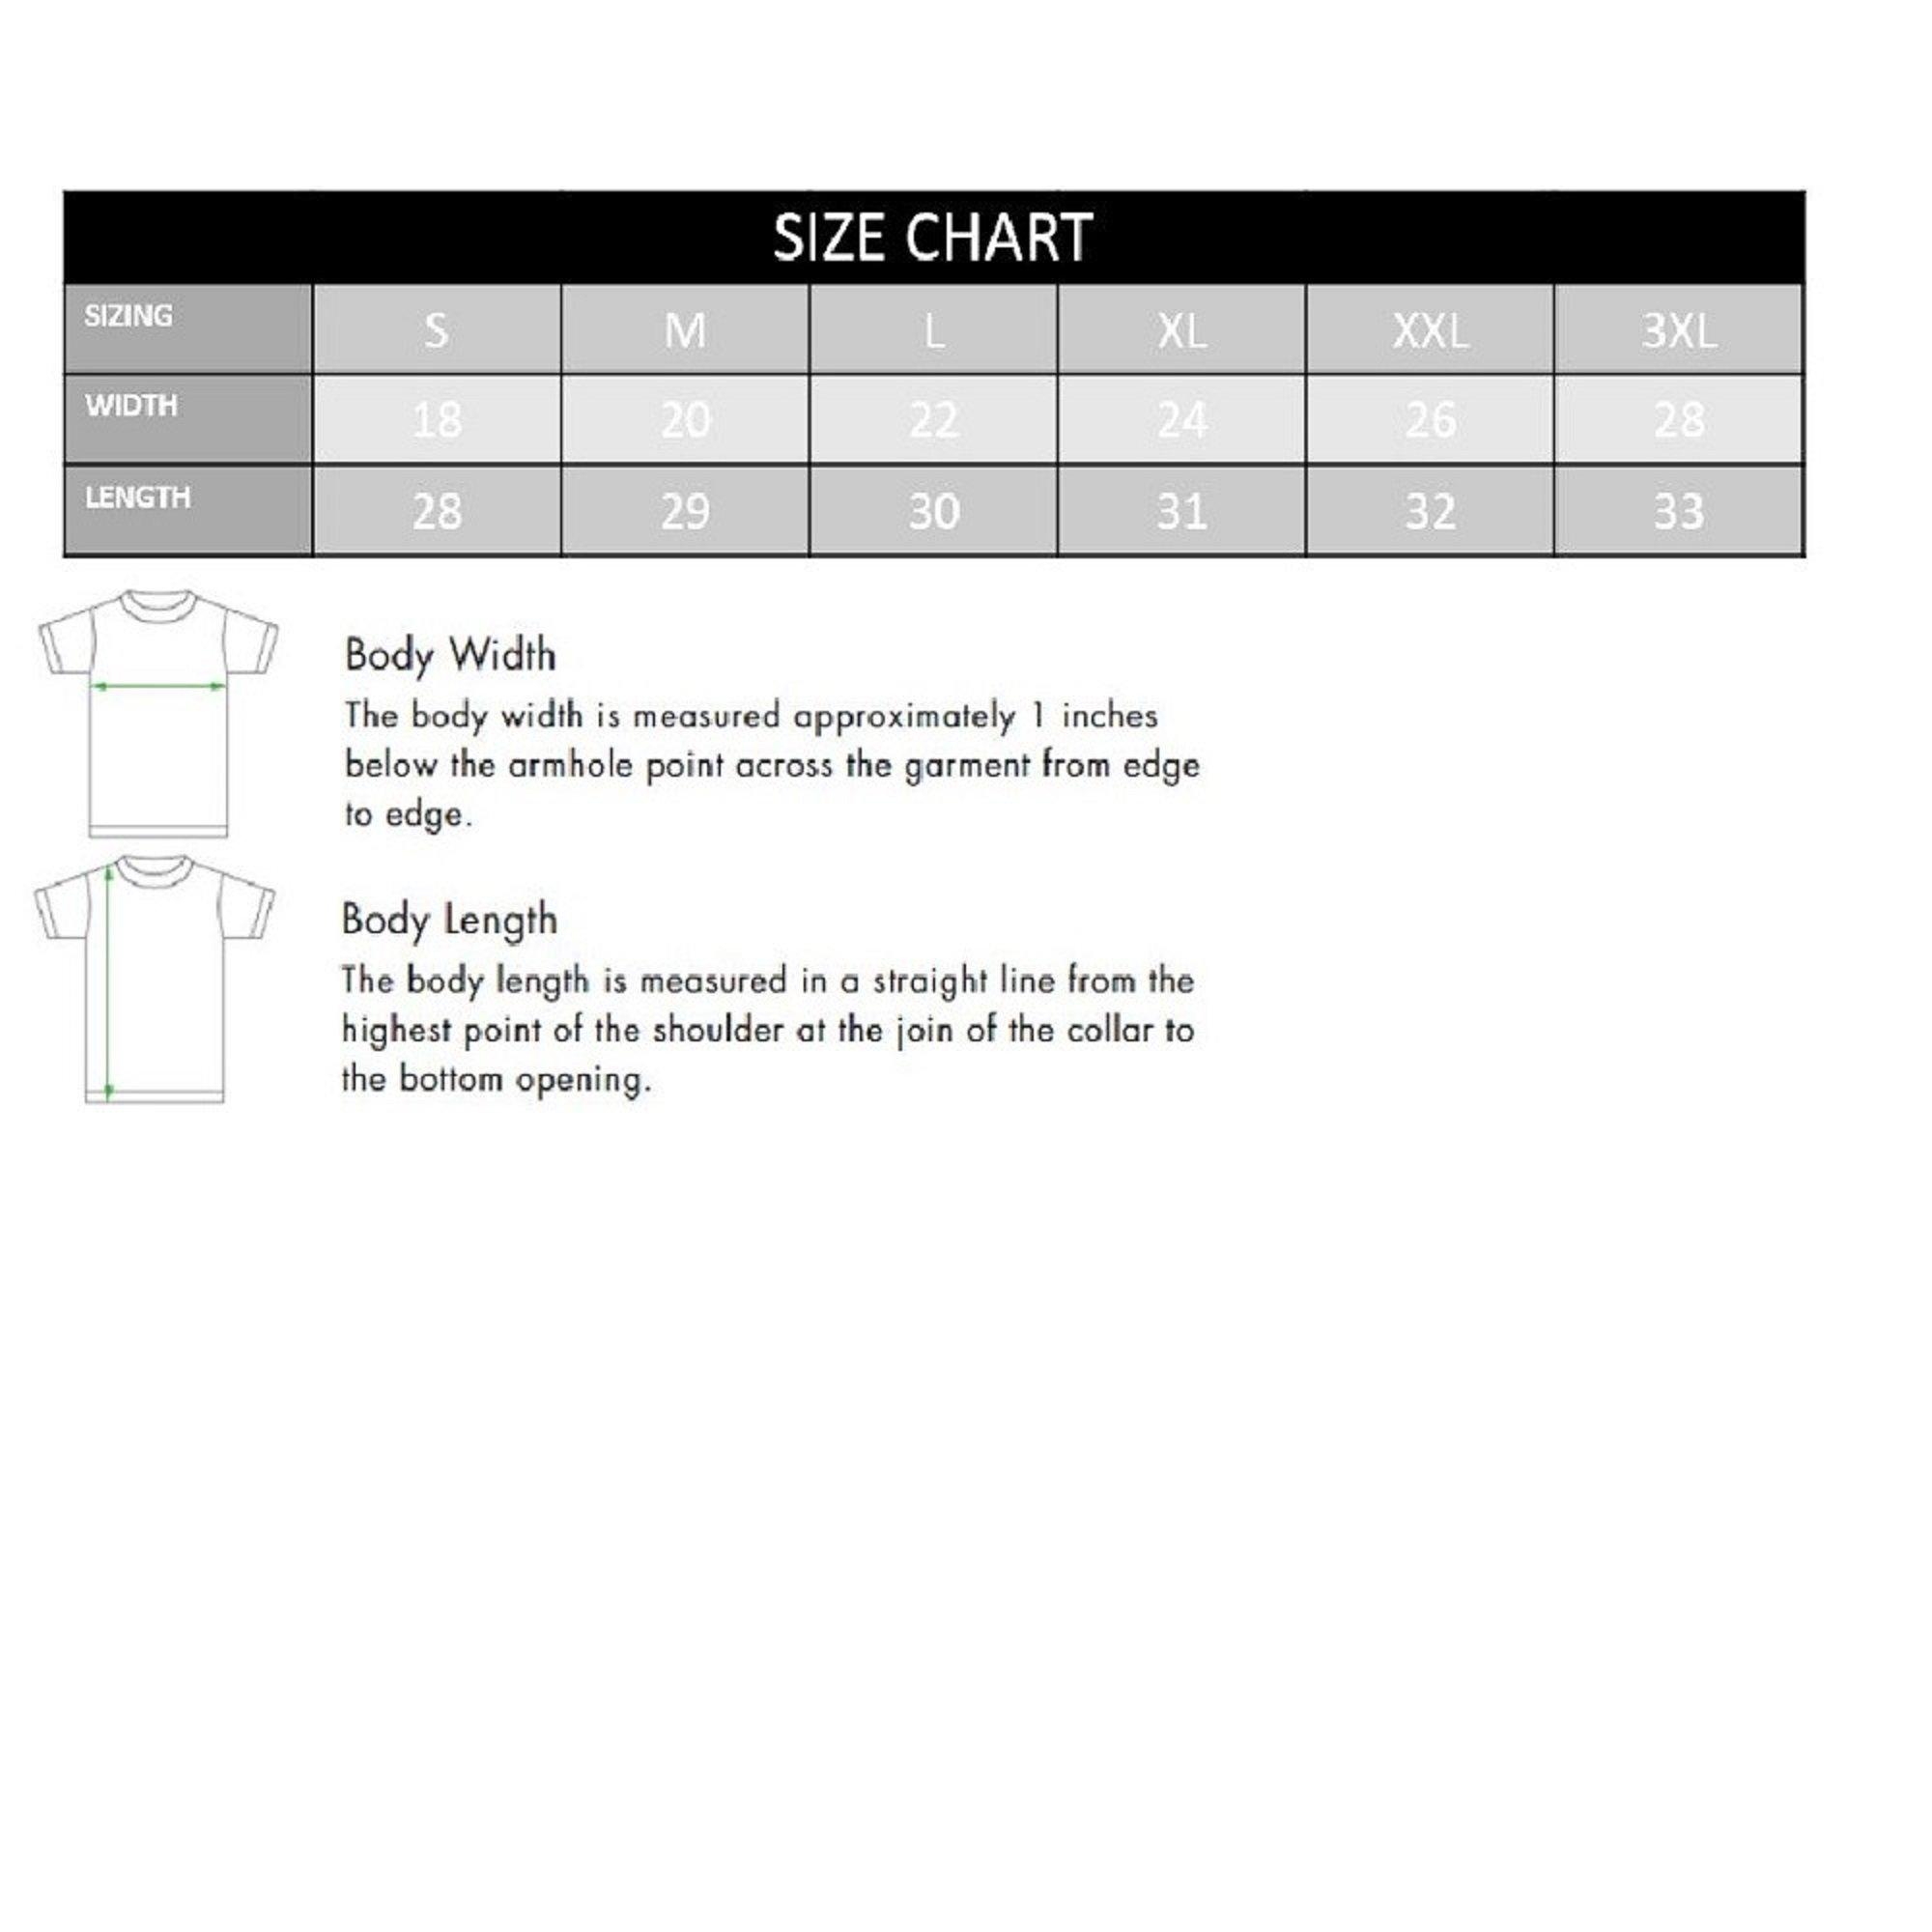 Dragon Ball Saiyan Army Vegeta Men's Short Sleeve Graphic T-Shirt